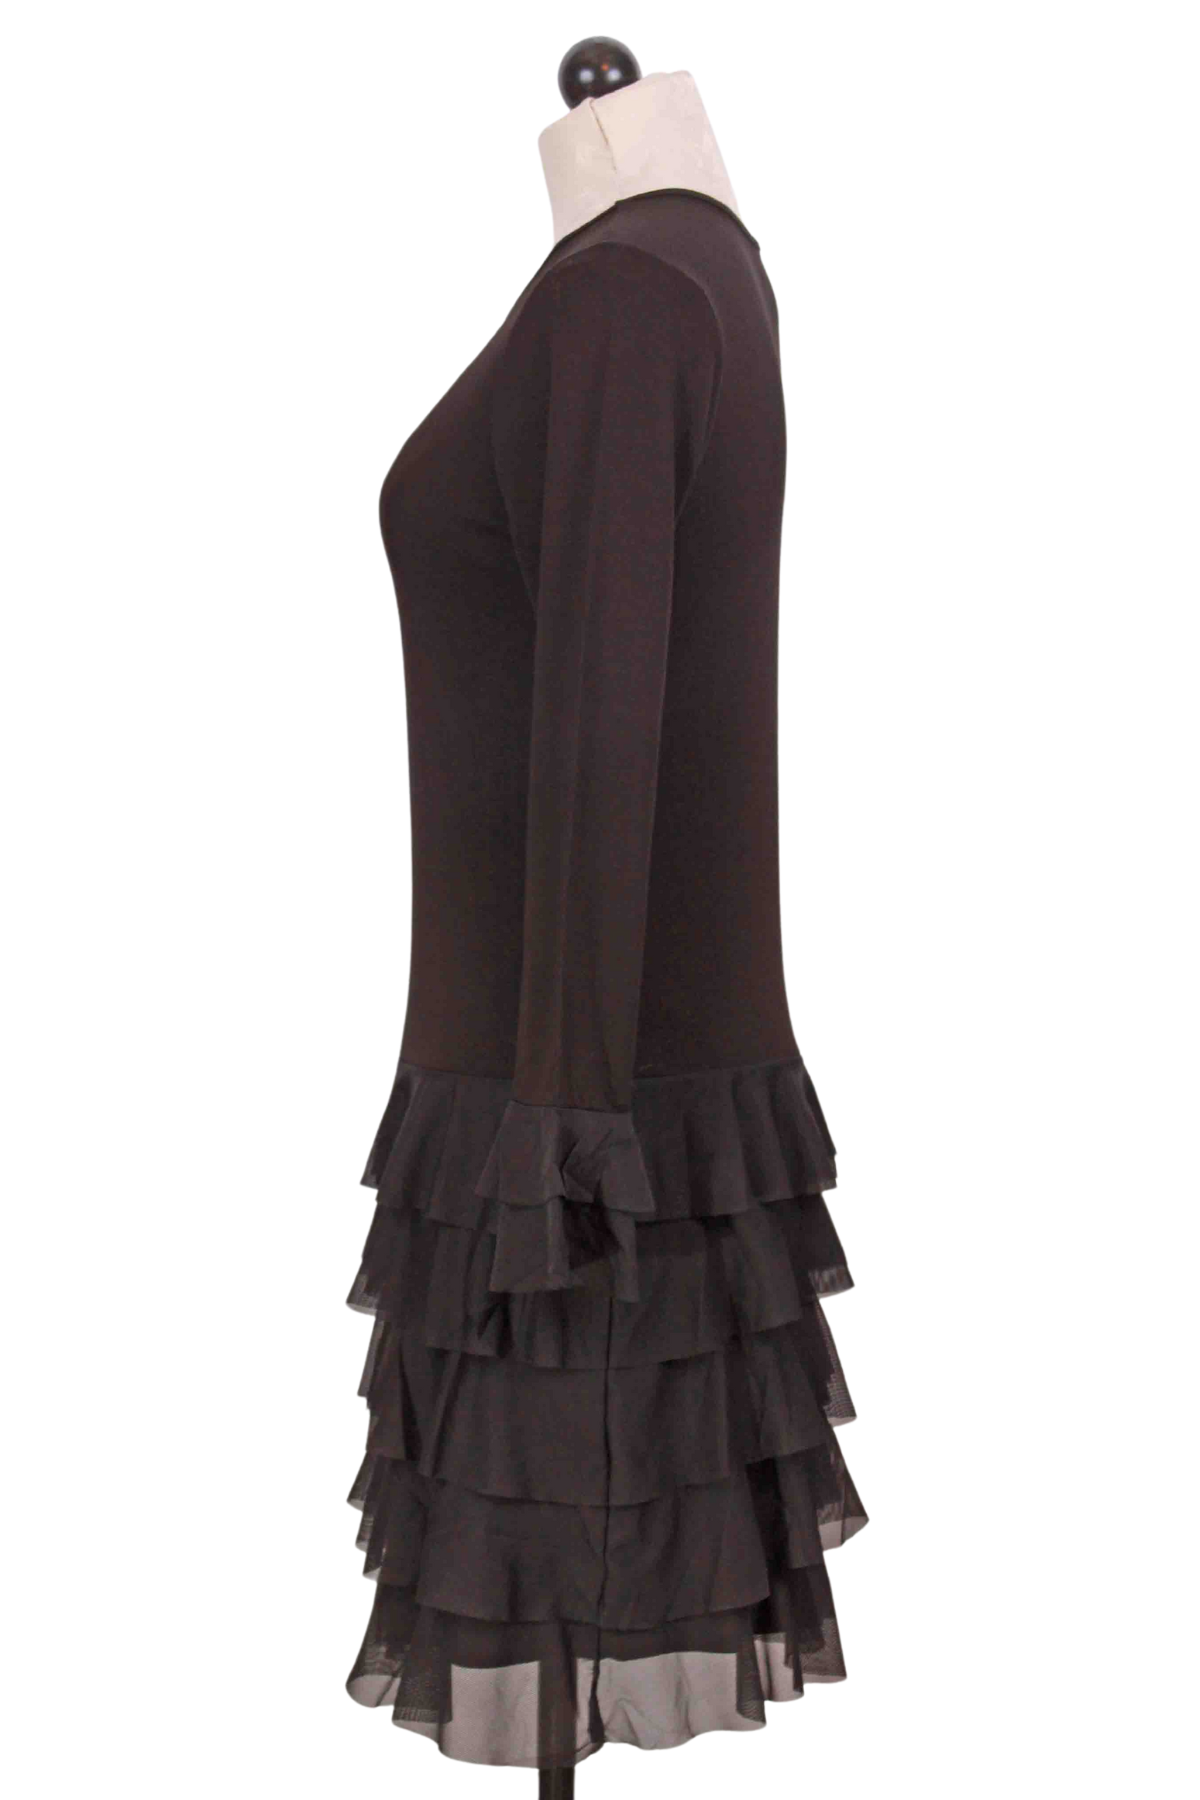 side view of Black Garbo Dress by Isle by Melis Kozan